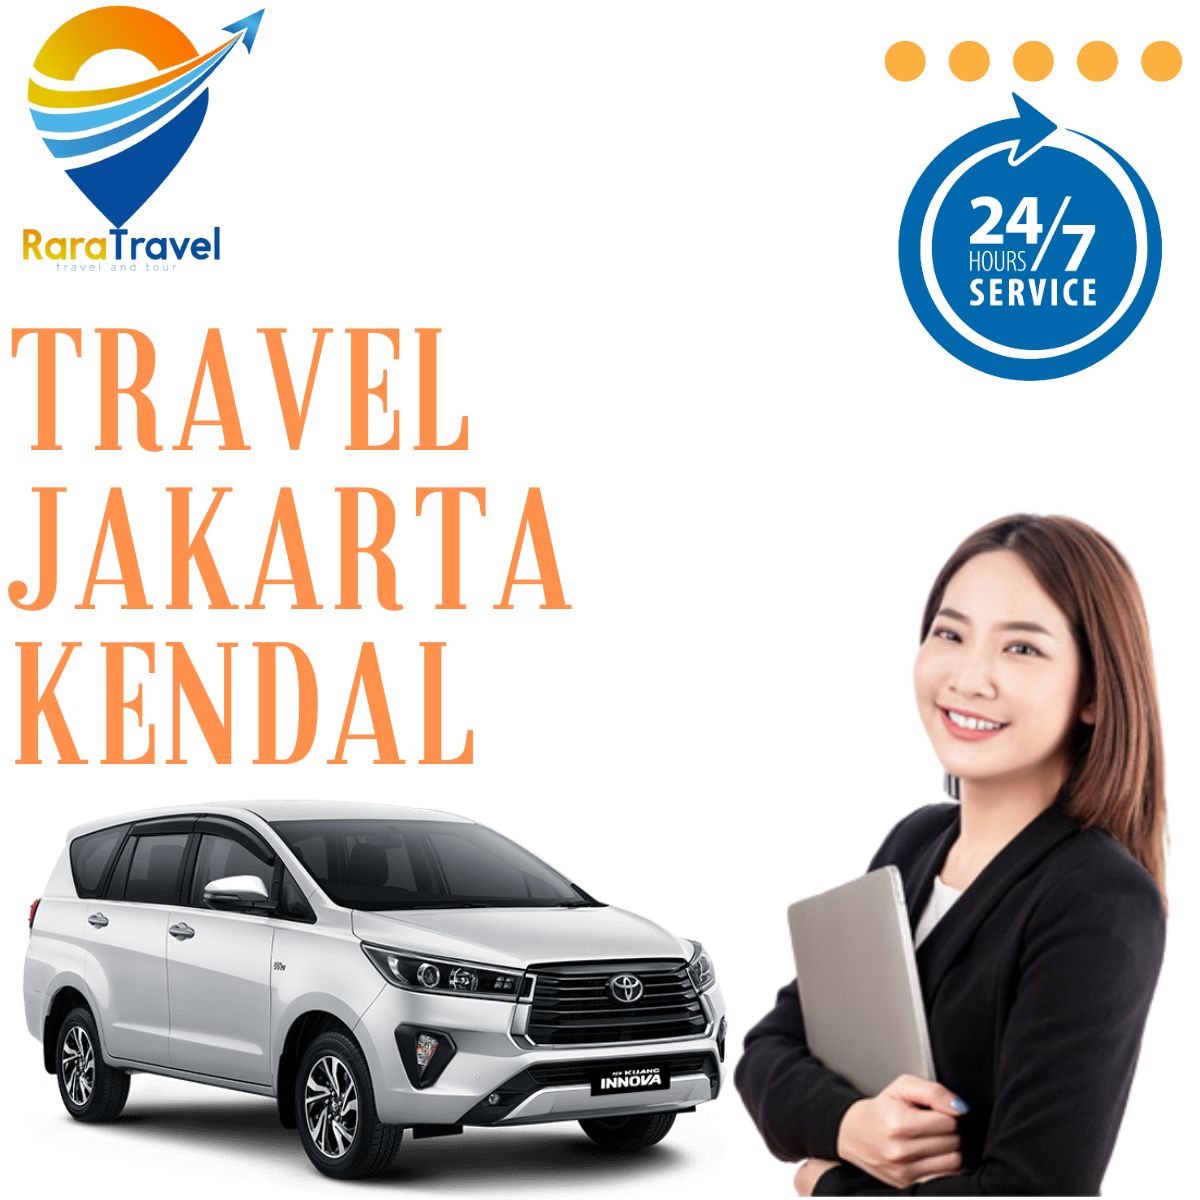 Travel Jakarta Kendal Hiace PP Harga Tiket Murah via TOLL